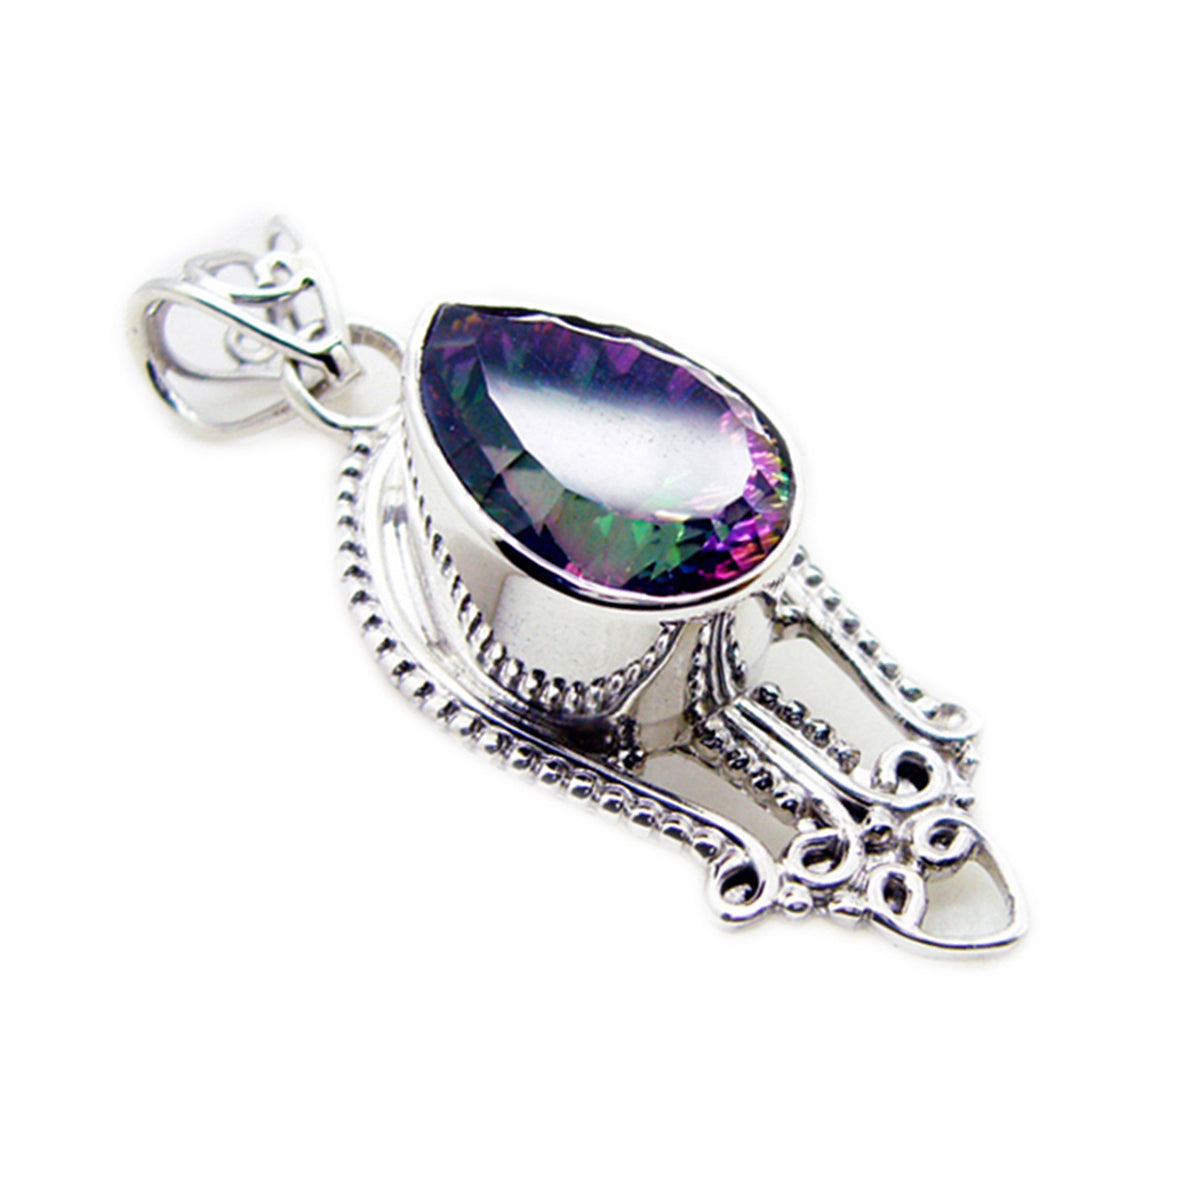 Riyo Beauteous Gemstone Pear Faceted Multi Color Mystic Quartz Sterling Silver Pendant Gift For Women